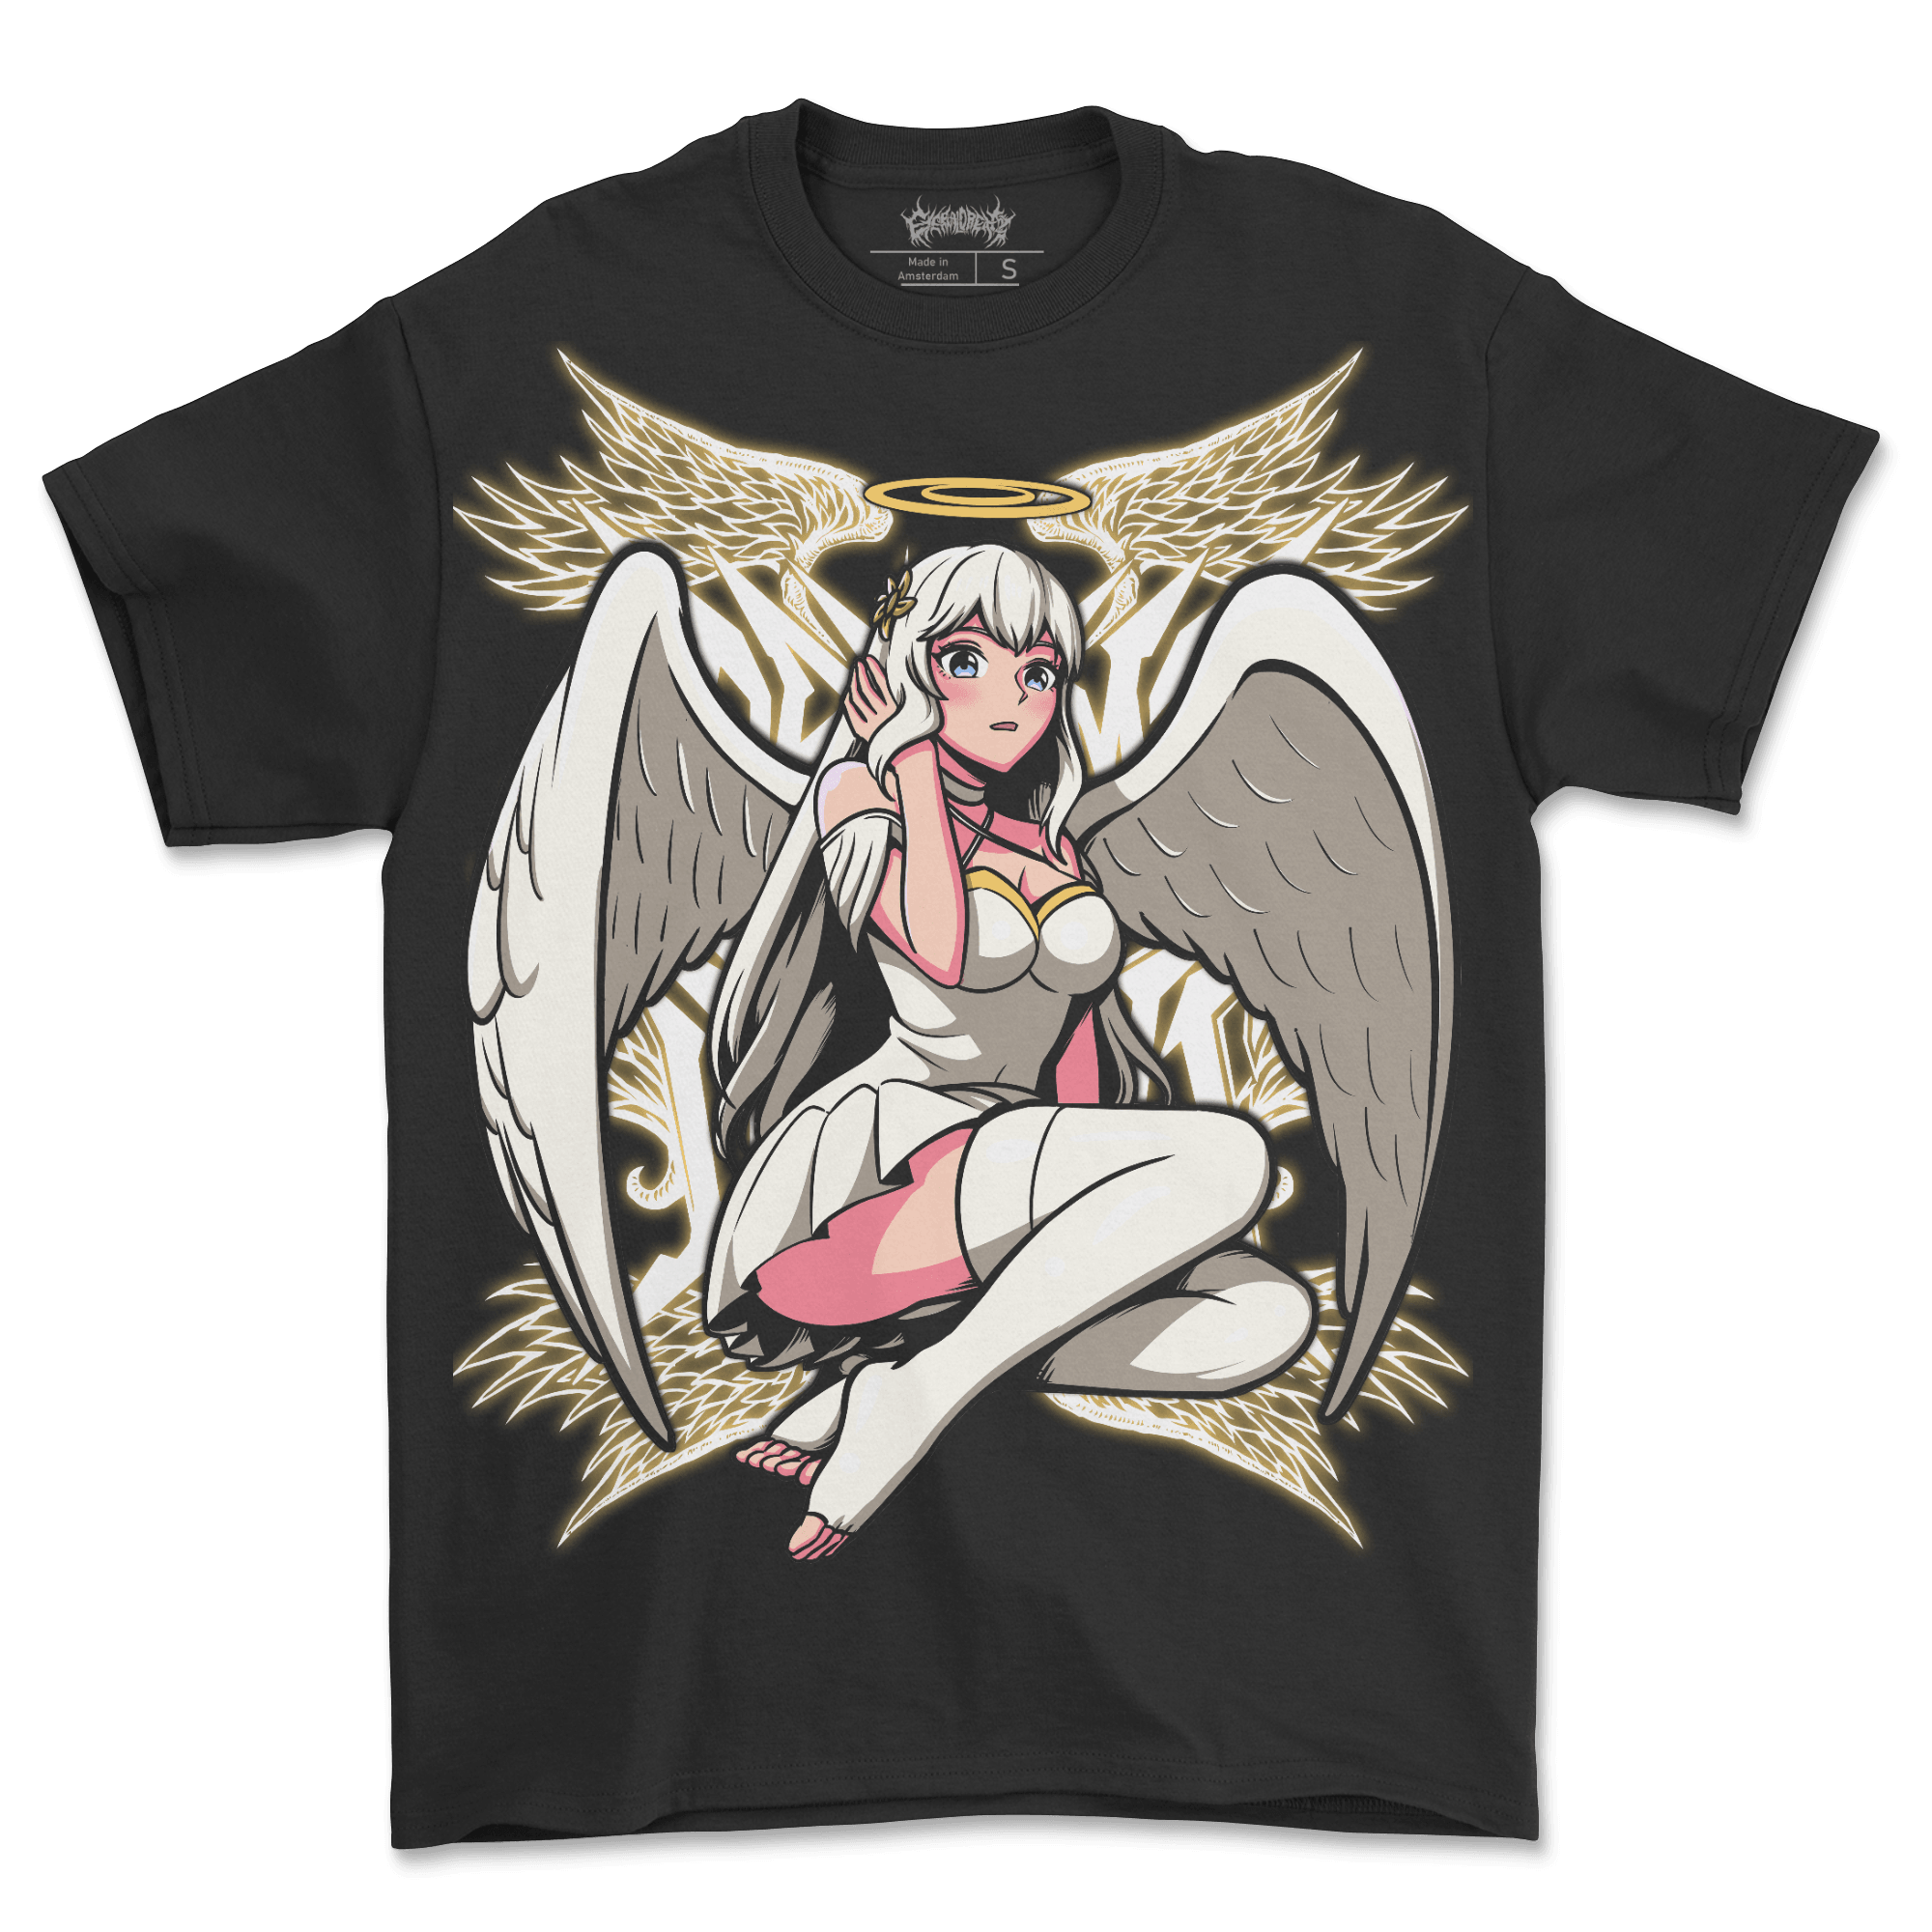 Seraph - Eternal Dreamz Clothing Anime Streetwear & Anime Clothing